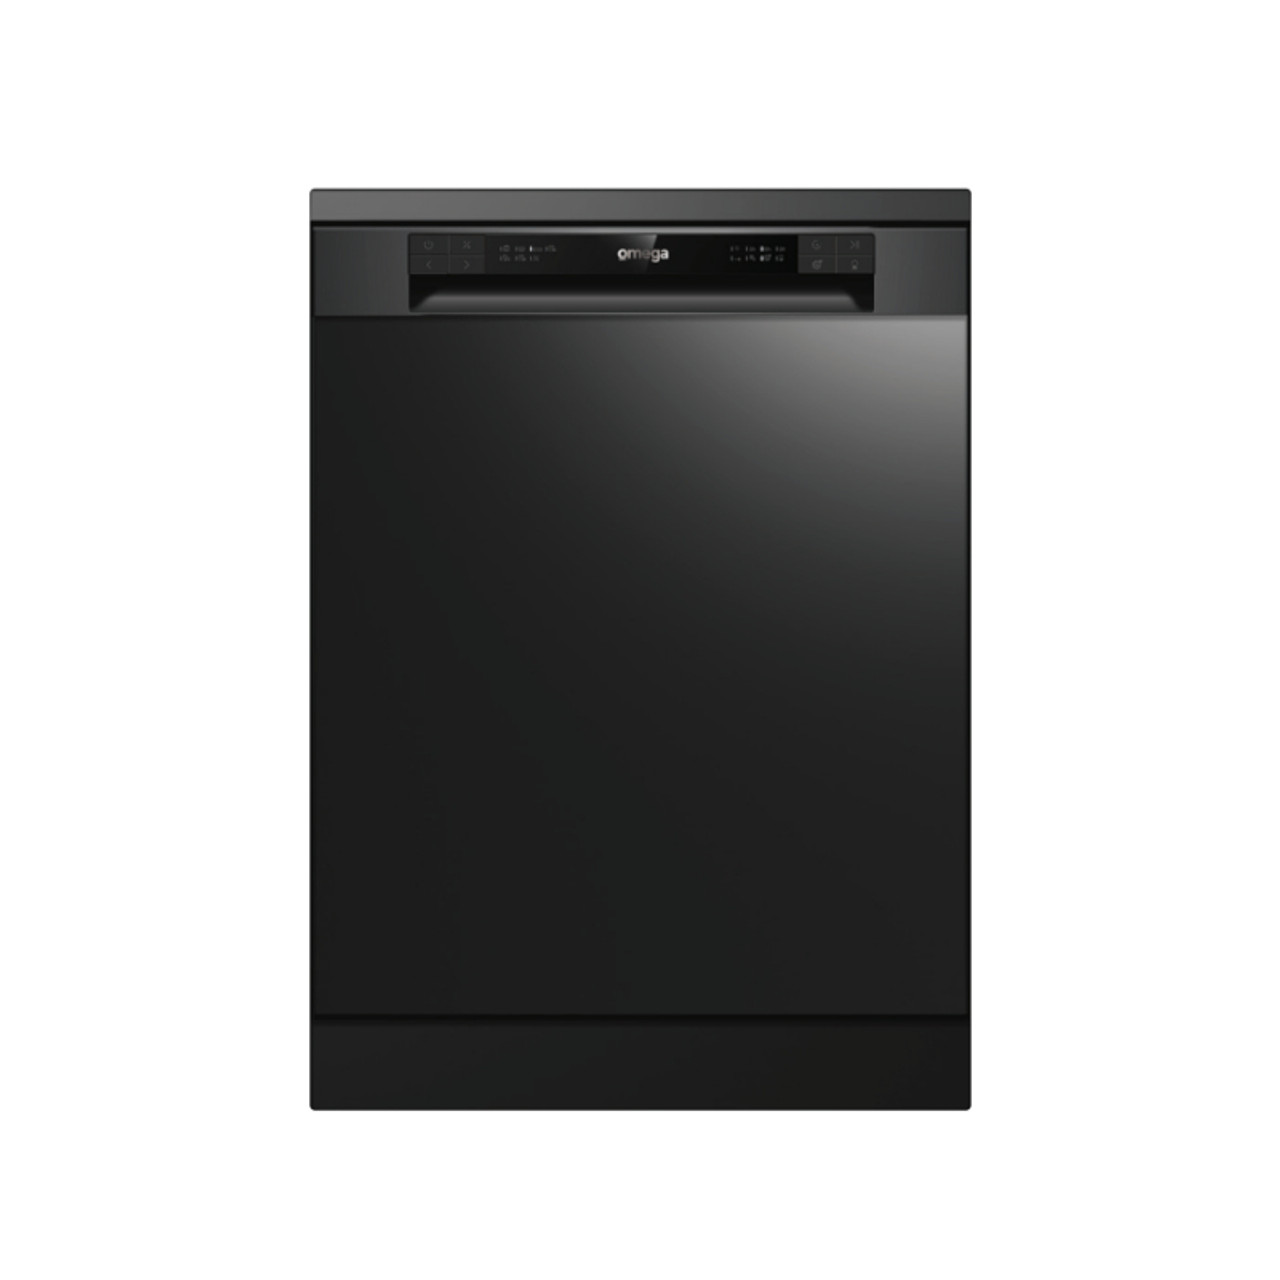  60cm Freestanding Dishwasher Black Stainless Steel 